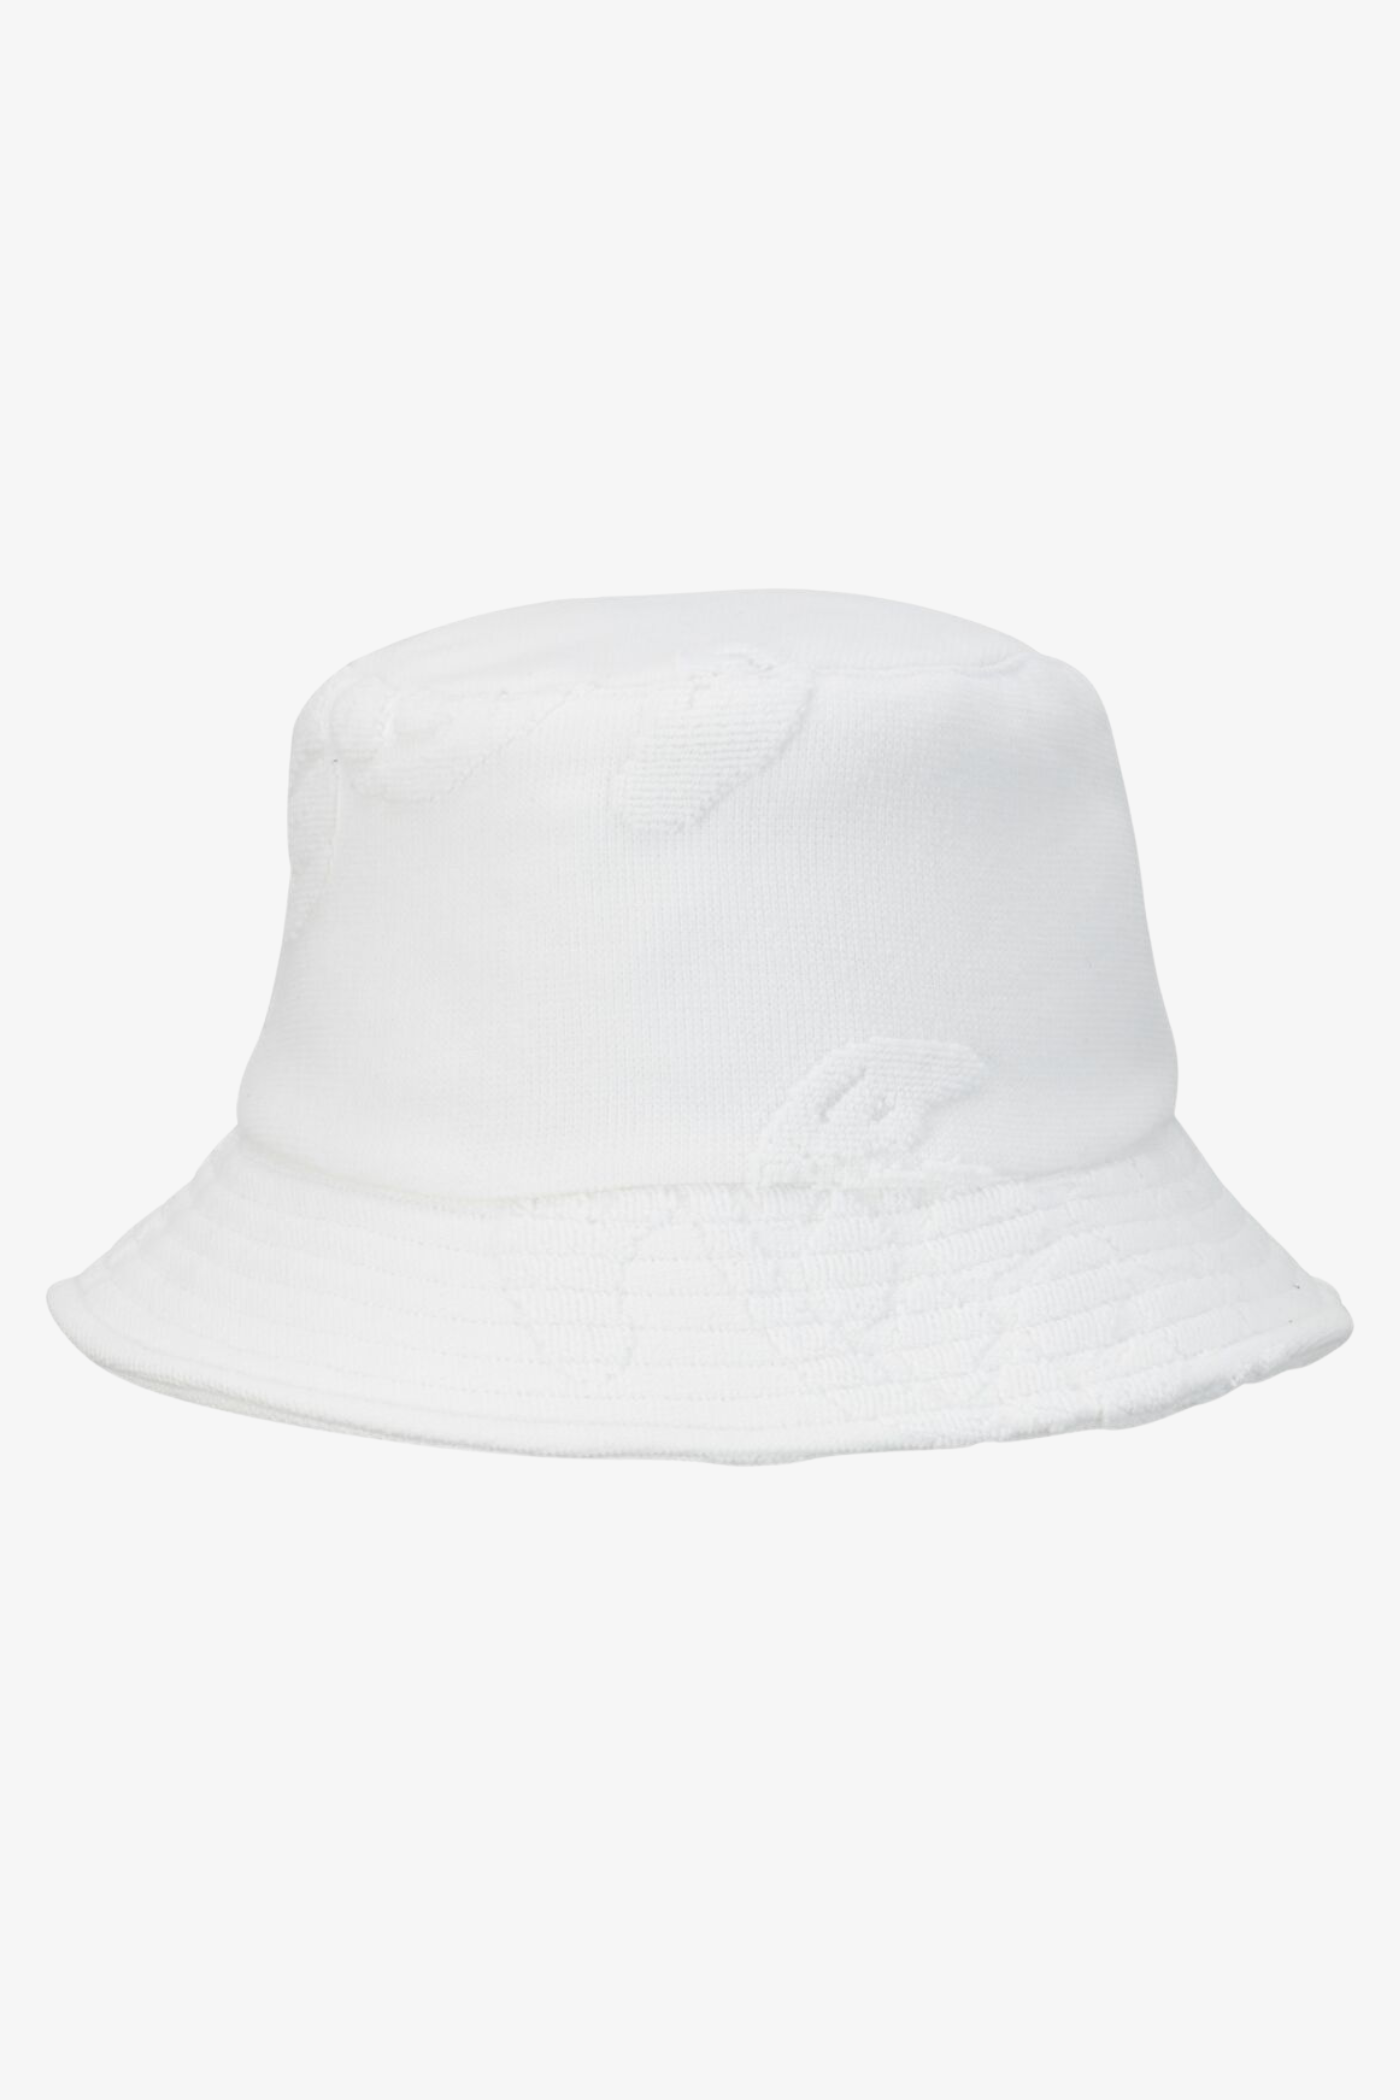 UNISEX TERRY BUCKET HAT - WHITE